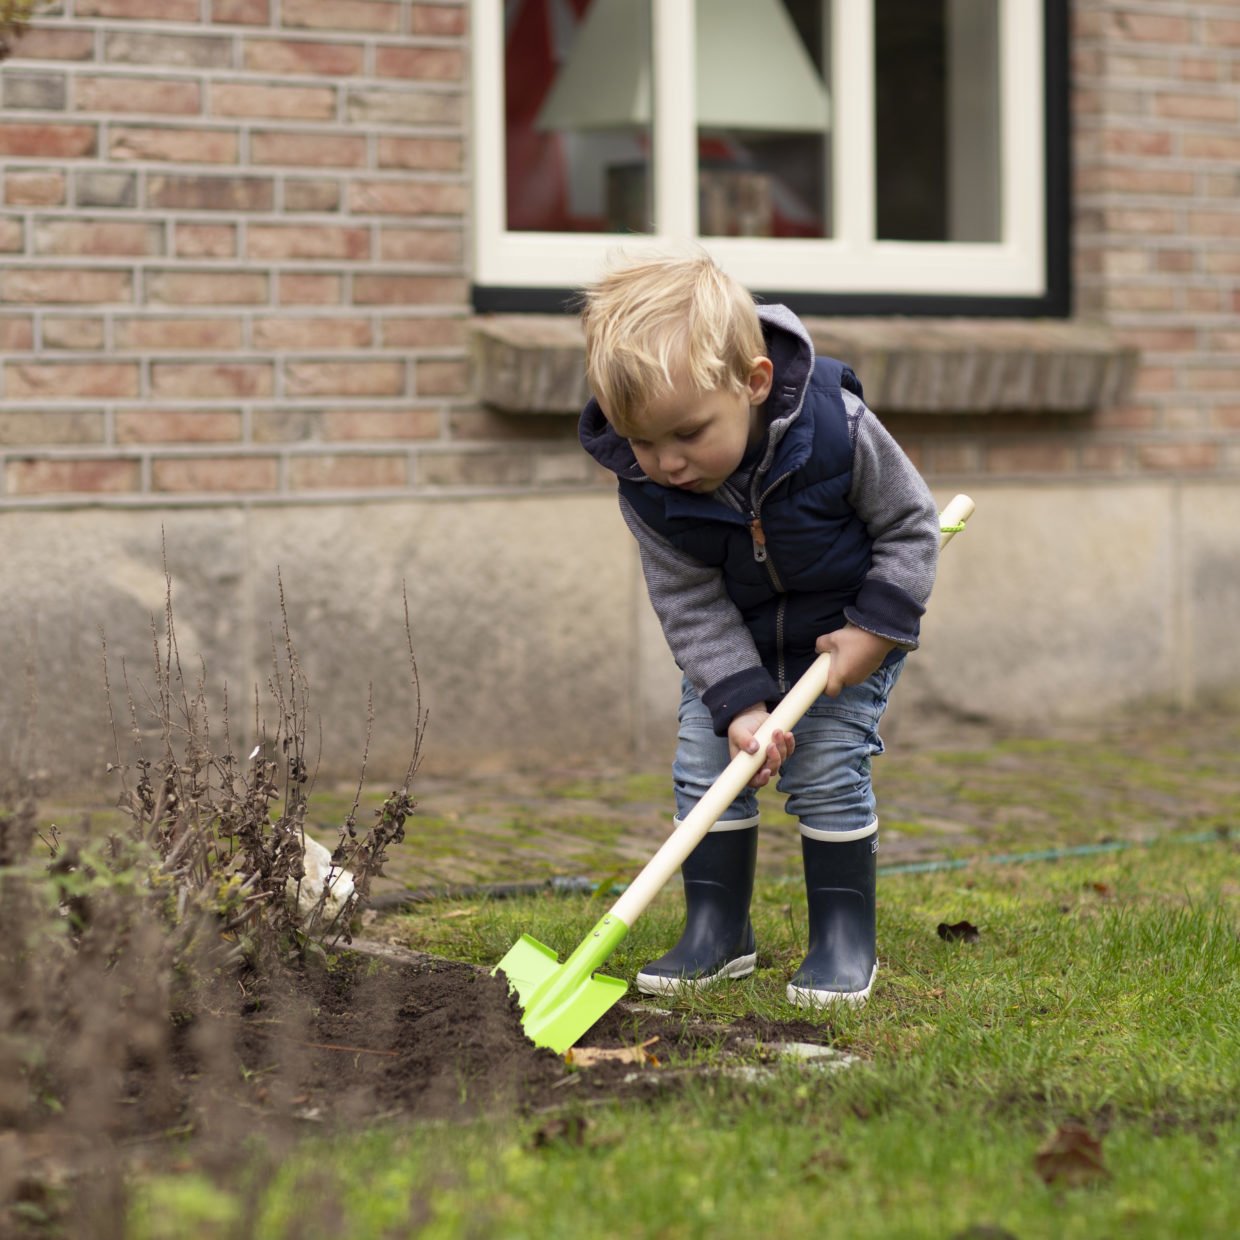 Kinder Esschert design | Buitenenthuis.nl - buitenenthuis.nl